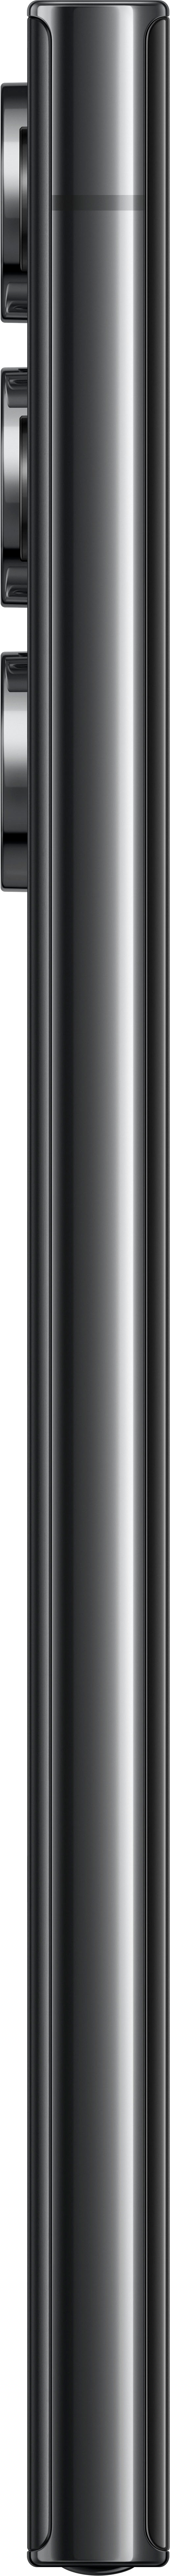 Buy Samsung Galaxy S23 Ultra 512GB Phantom Black from £1,049.00 (Today) –  Best Deals on